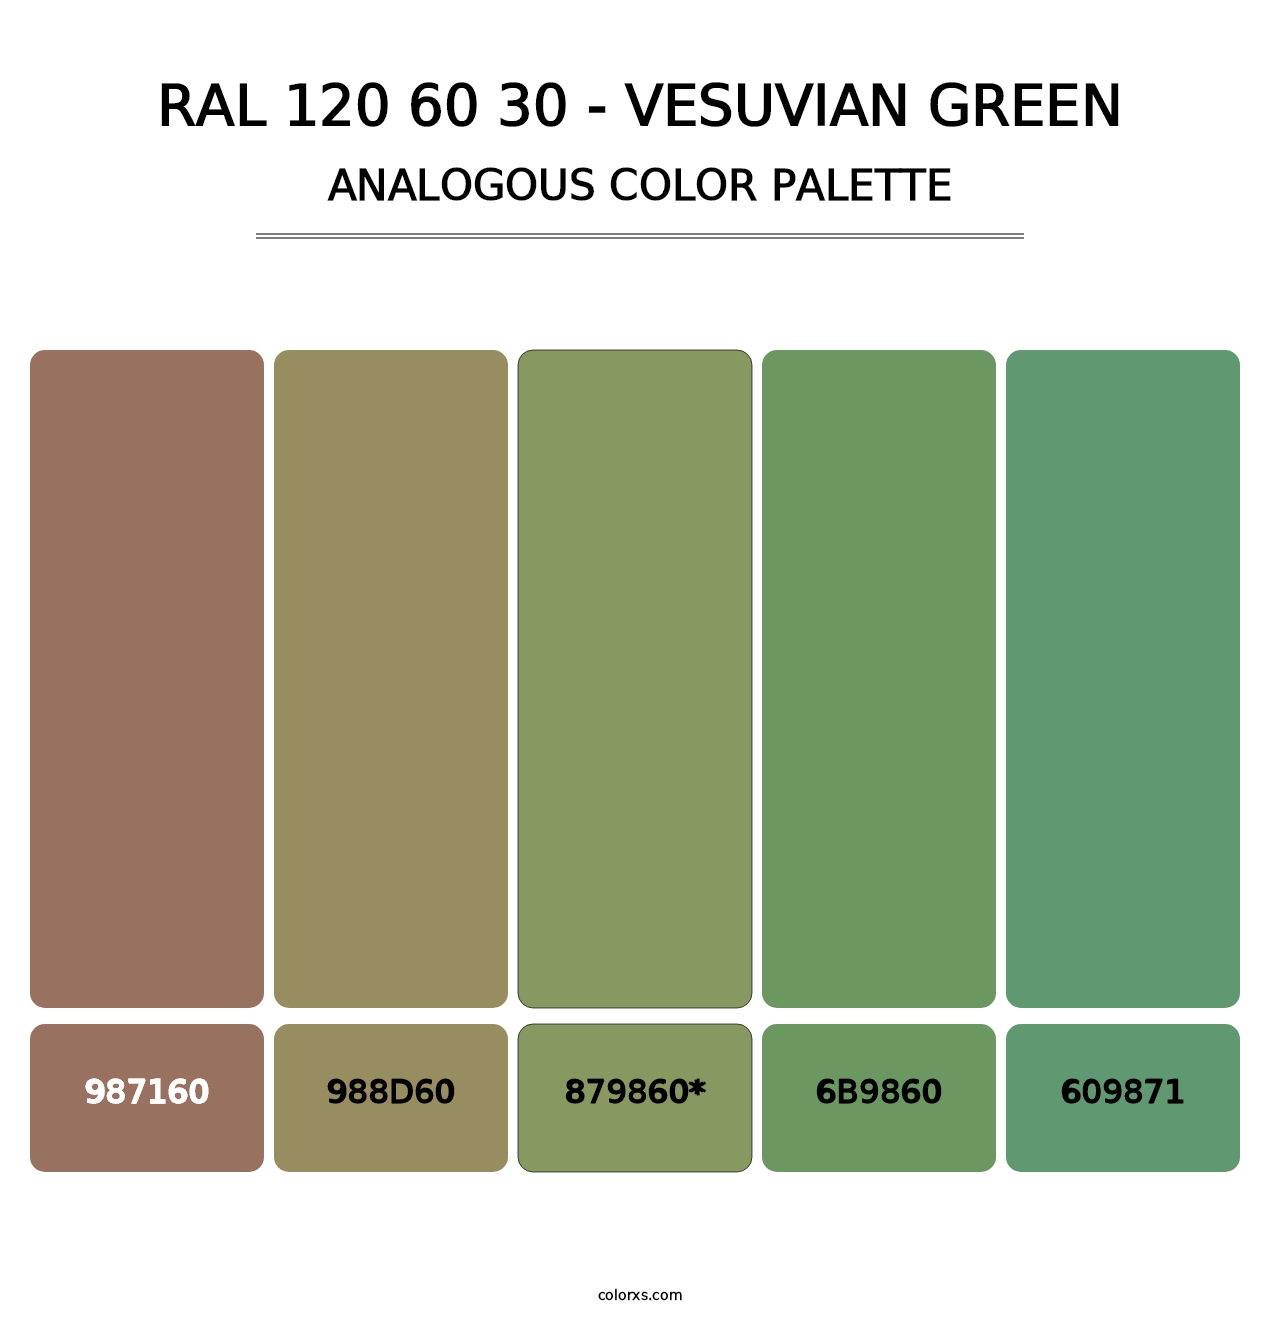 RAL 120 60 30 - Vesuvian Green - Analogous Color Palette